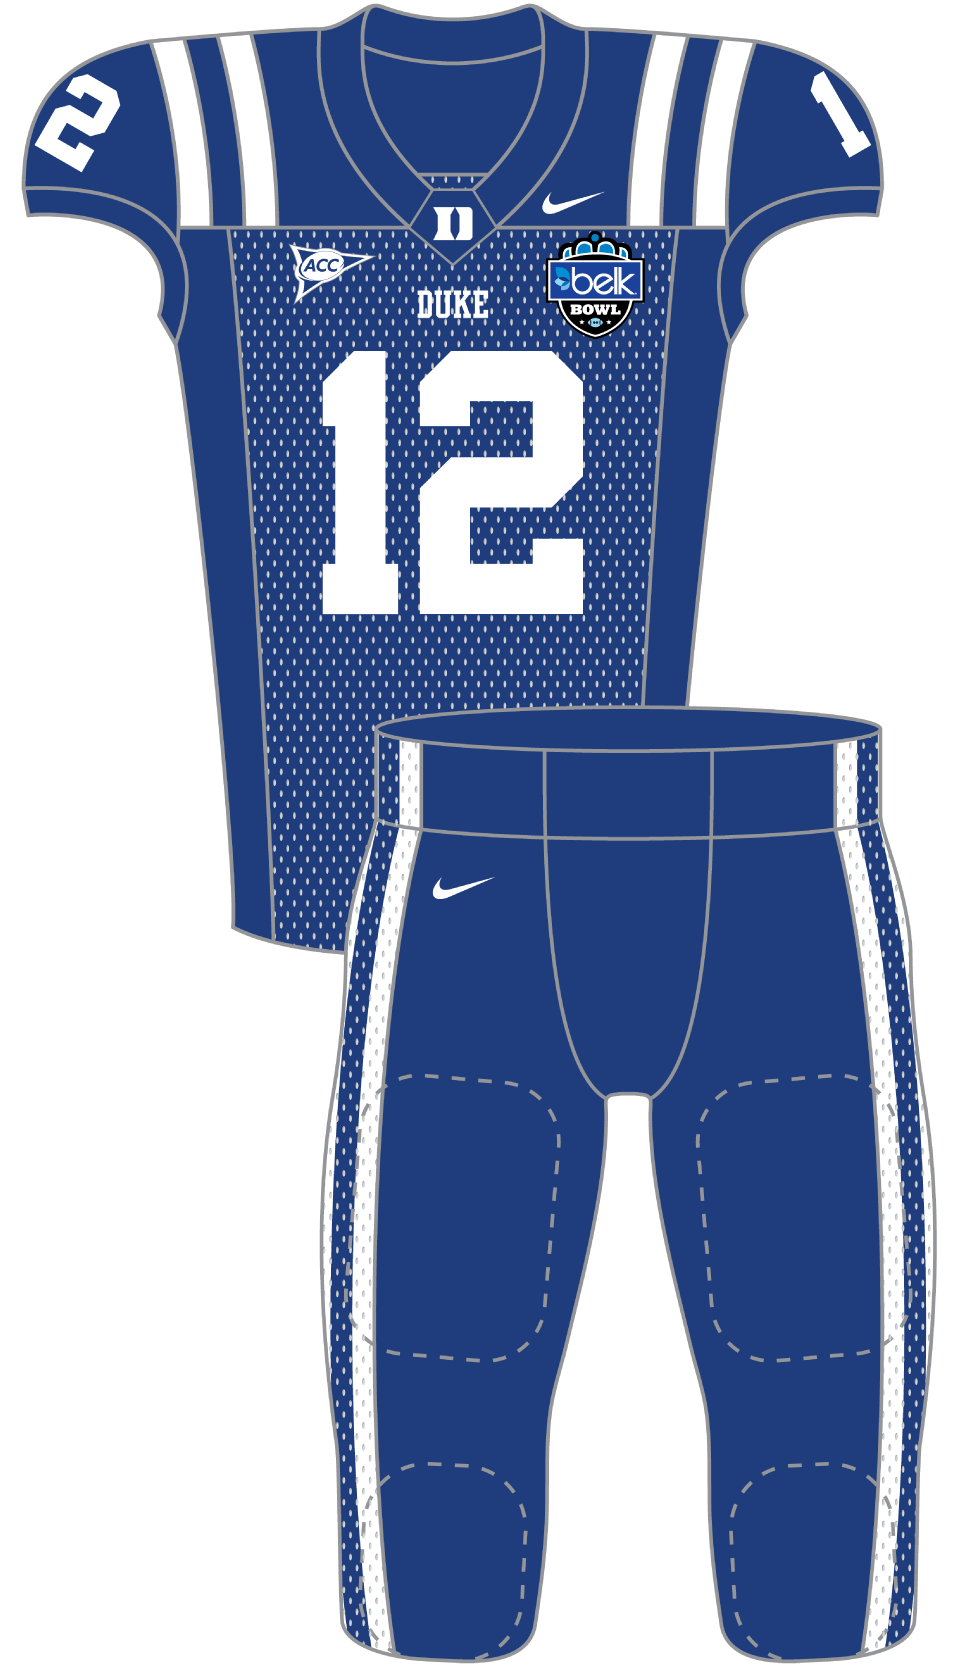 Duke 2012 Blue Uniform